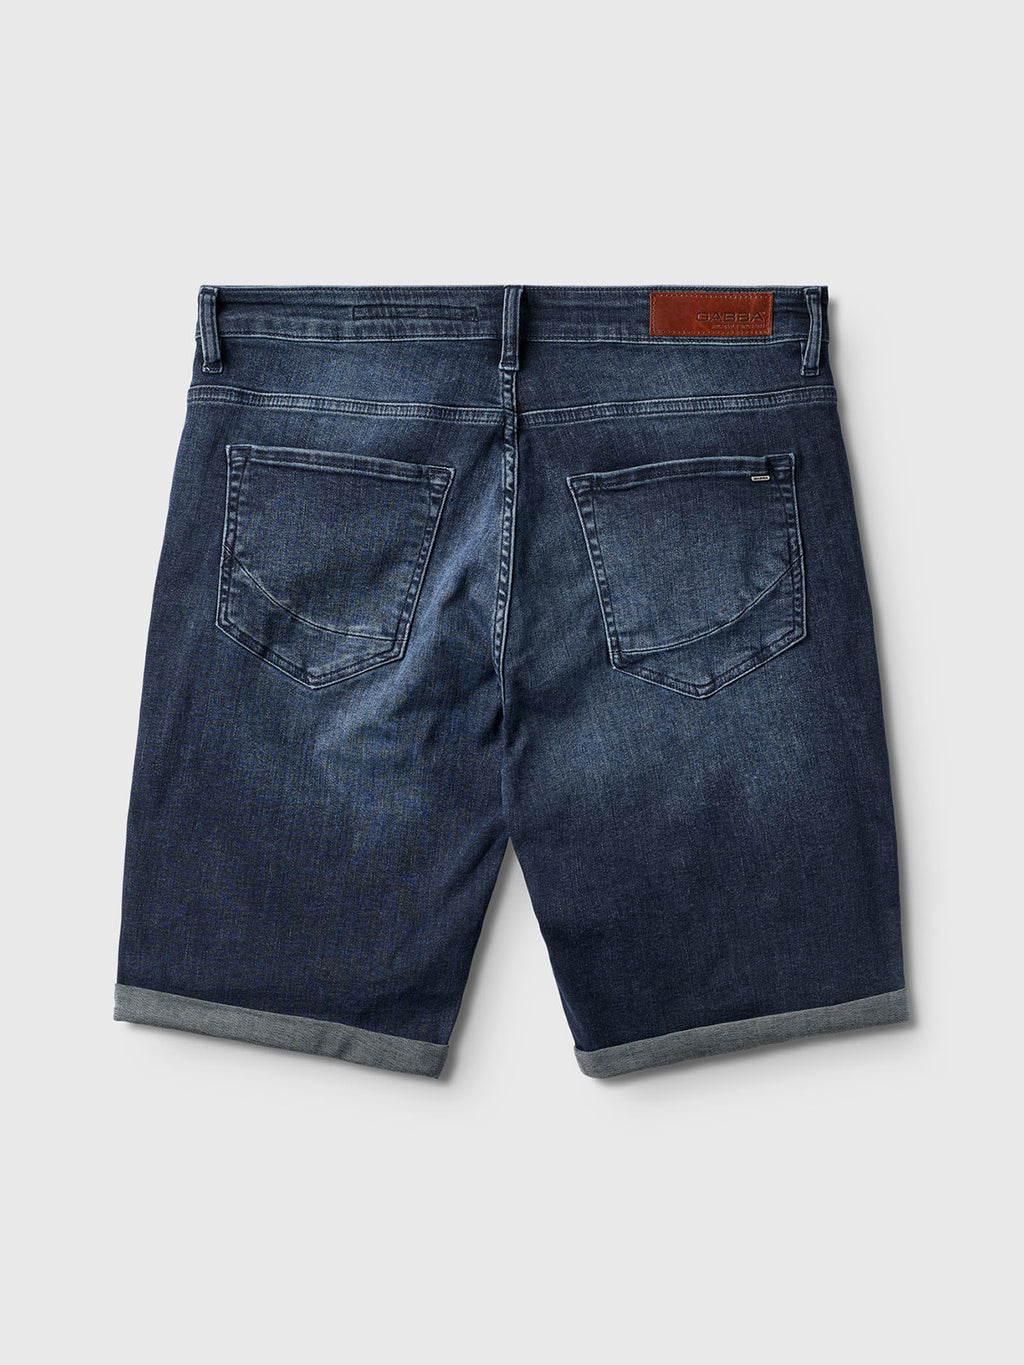 Markus K3987 Shorts - Mid Blue Denim